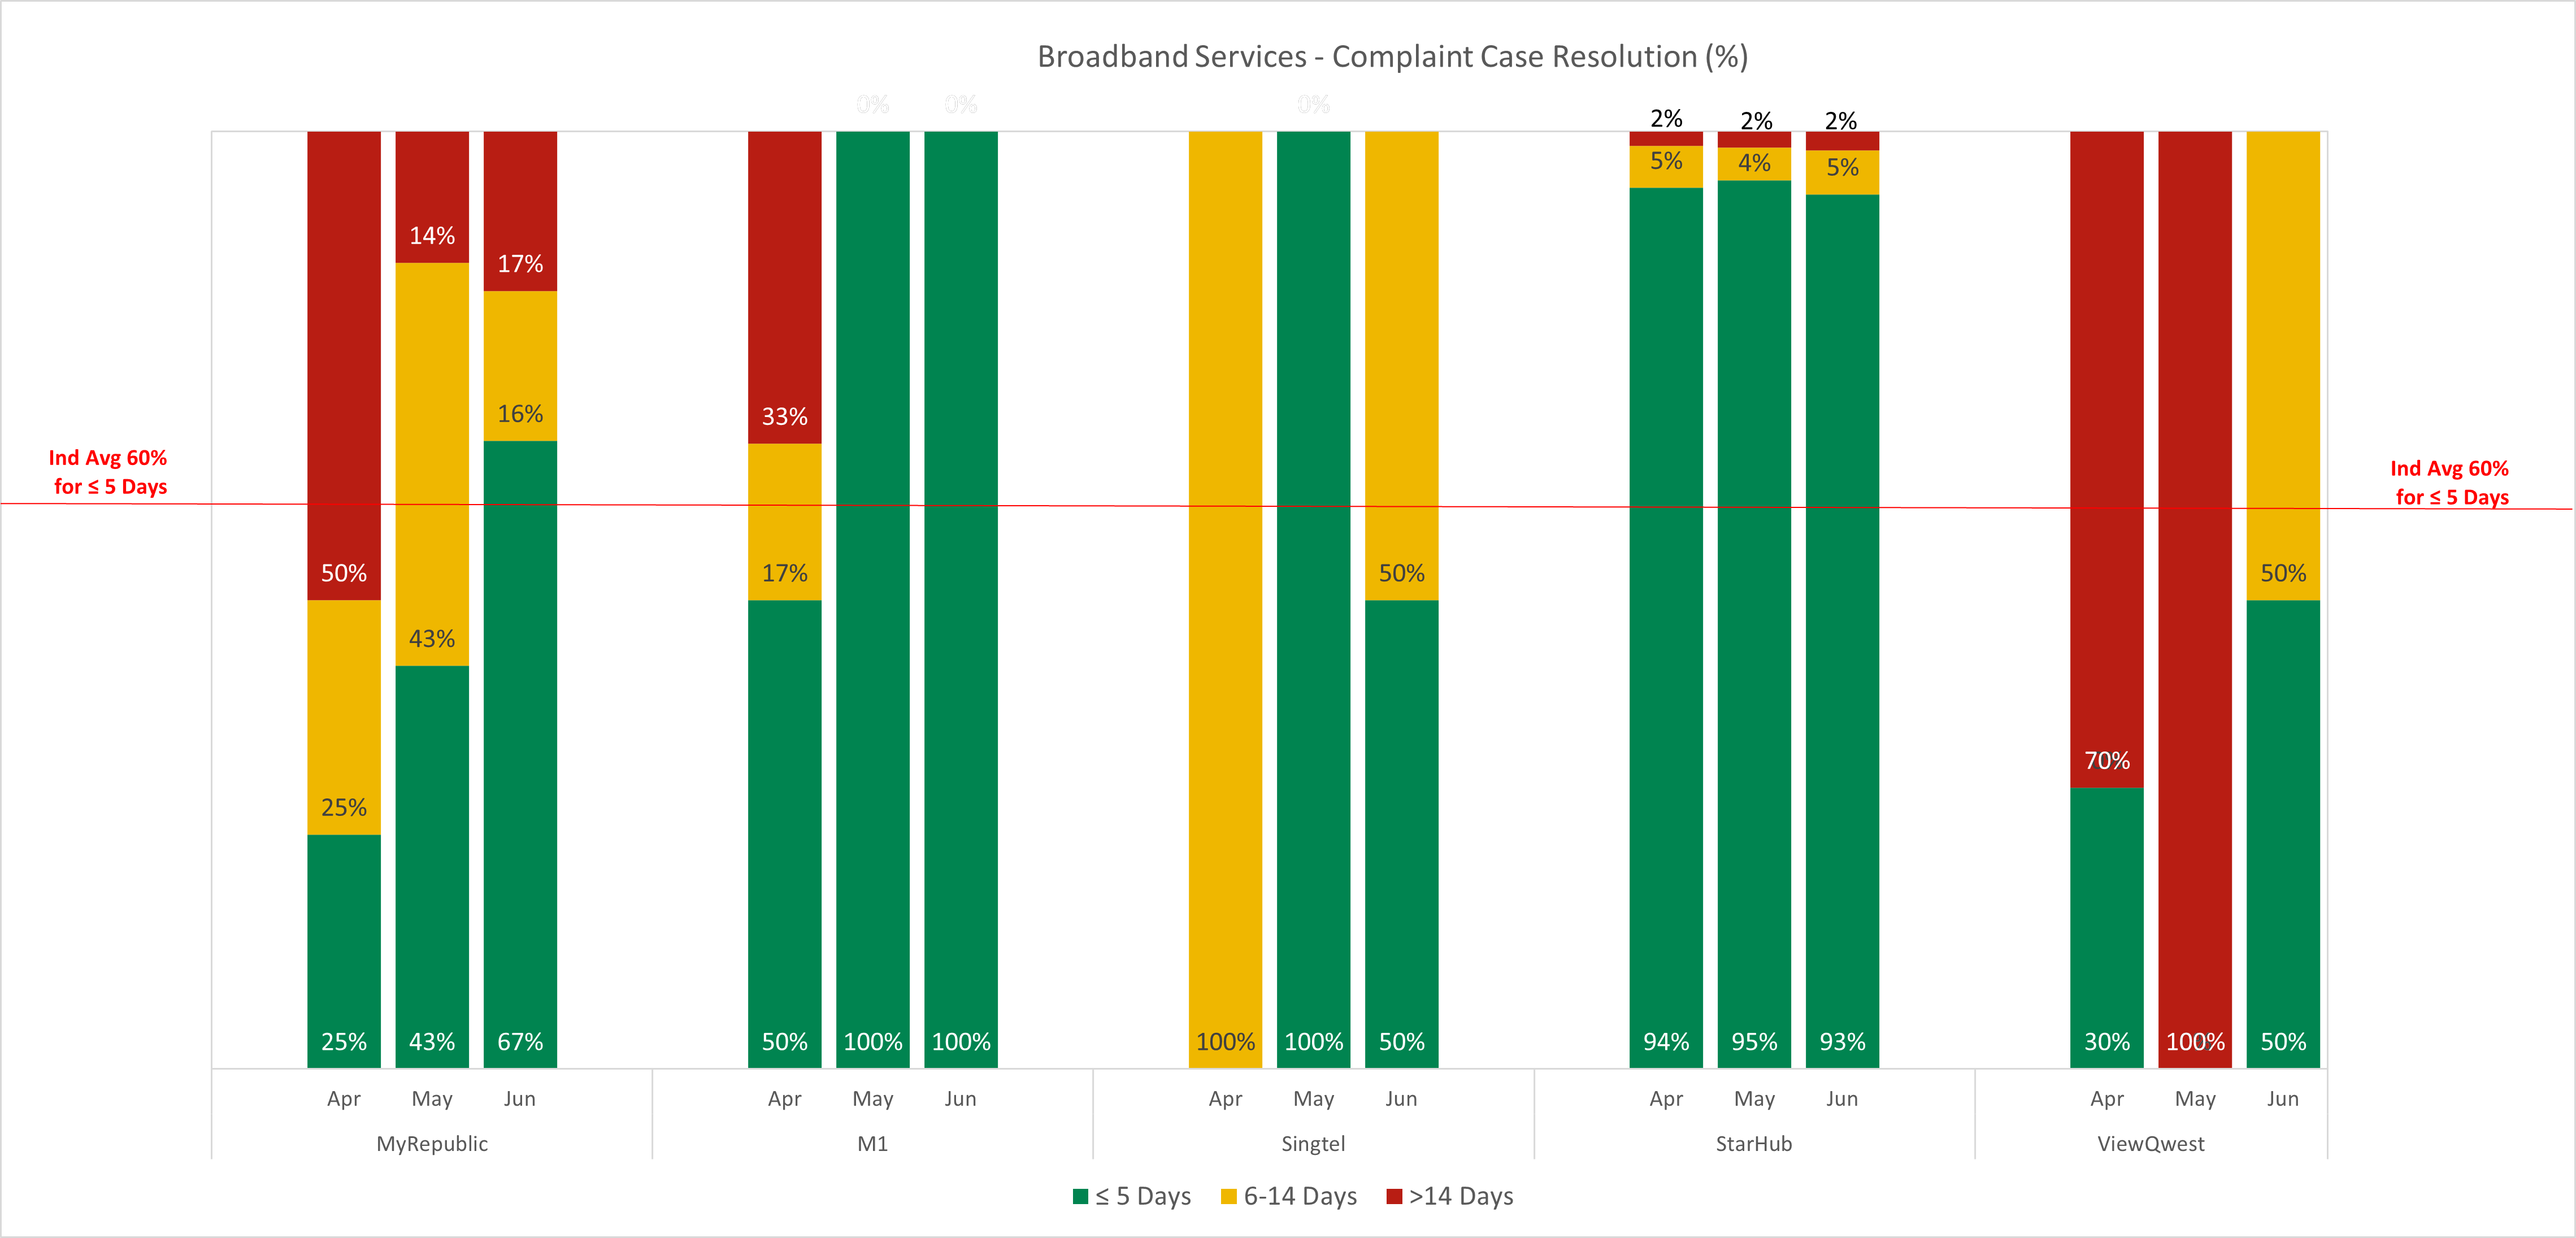 BroadBand Services - Complaint Case Resolution